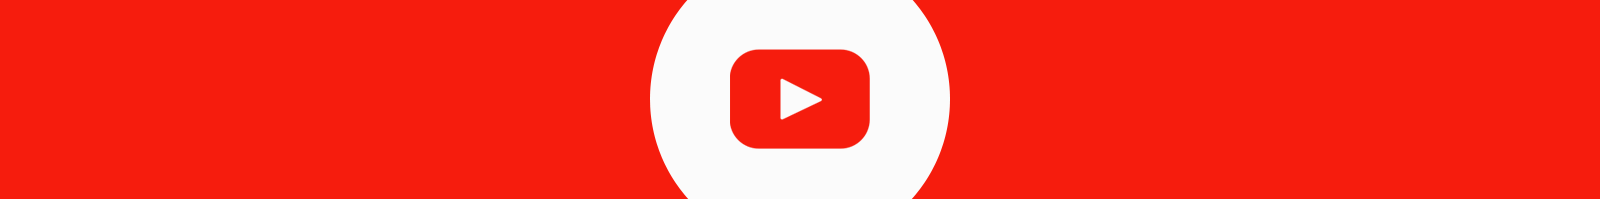 Youtube Divider